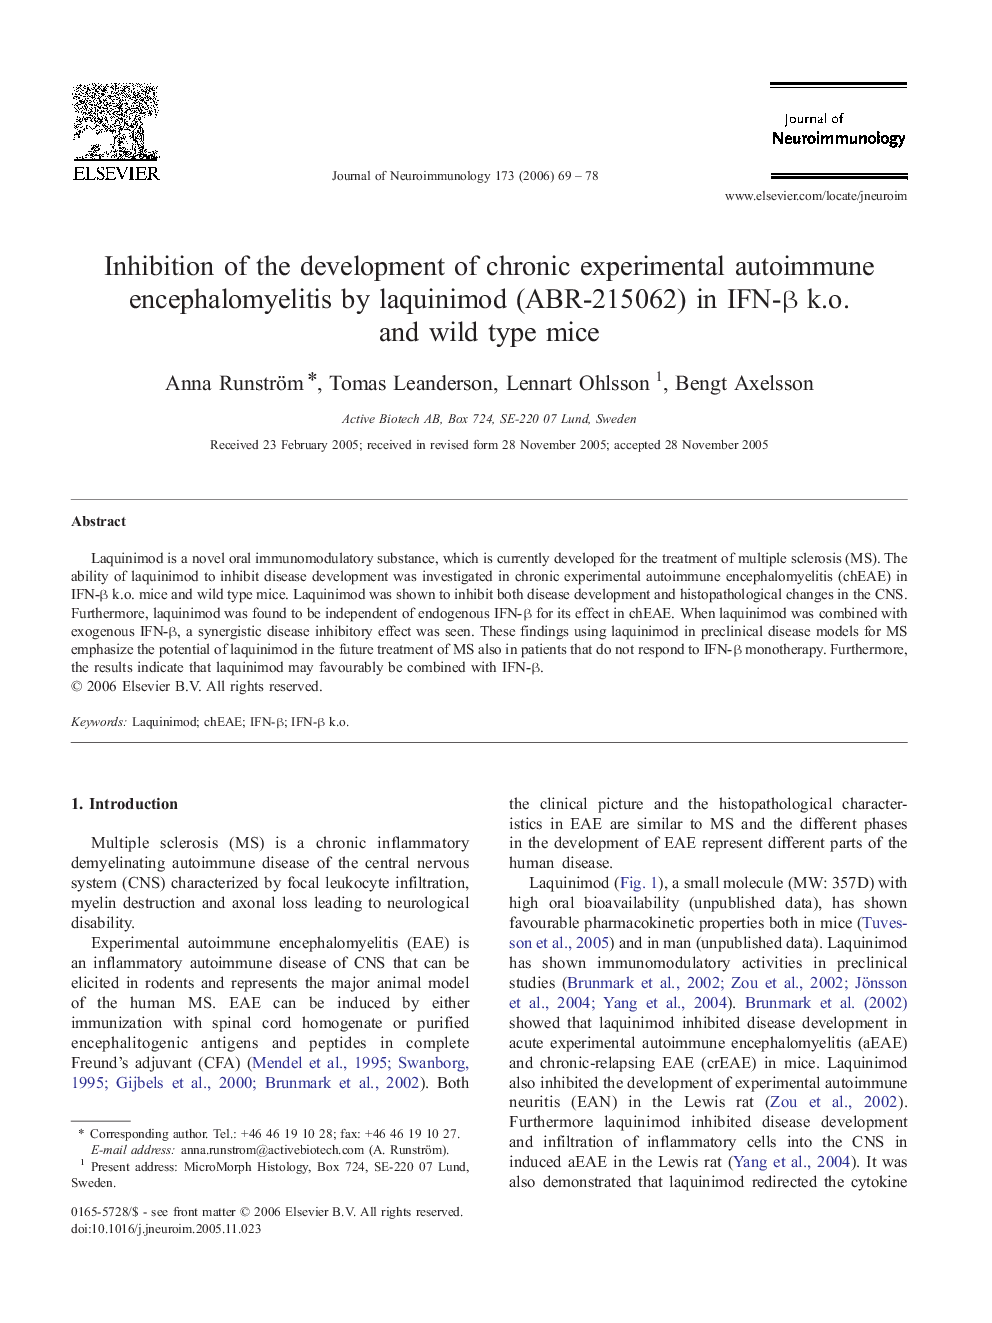 Inhibition of the development of chronic experimental autoimmune encephalomyelitis by laquinimod (ABR-215062) in IFN-β k.o. and wild type mice